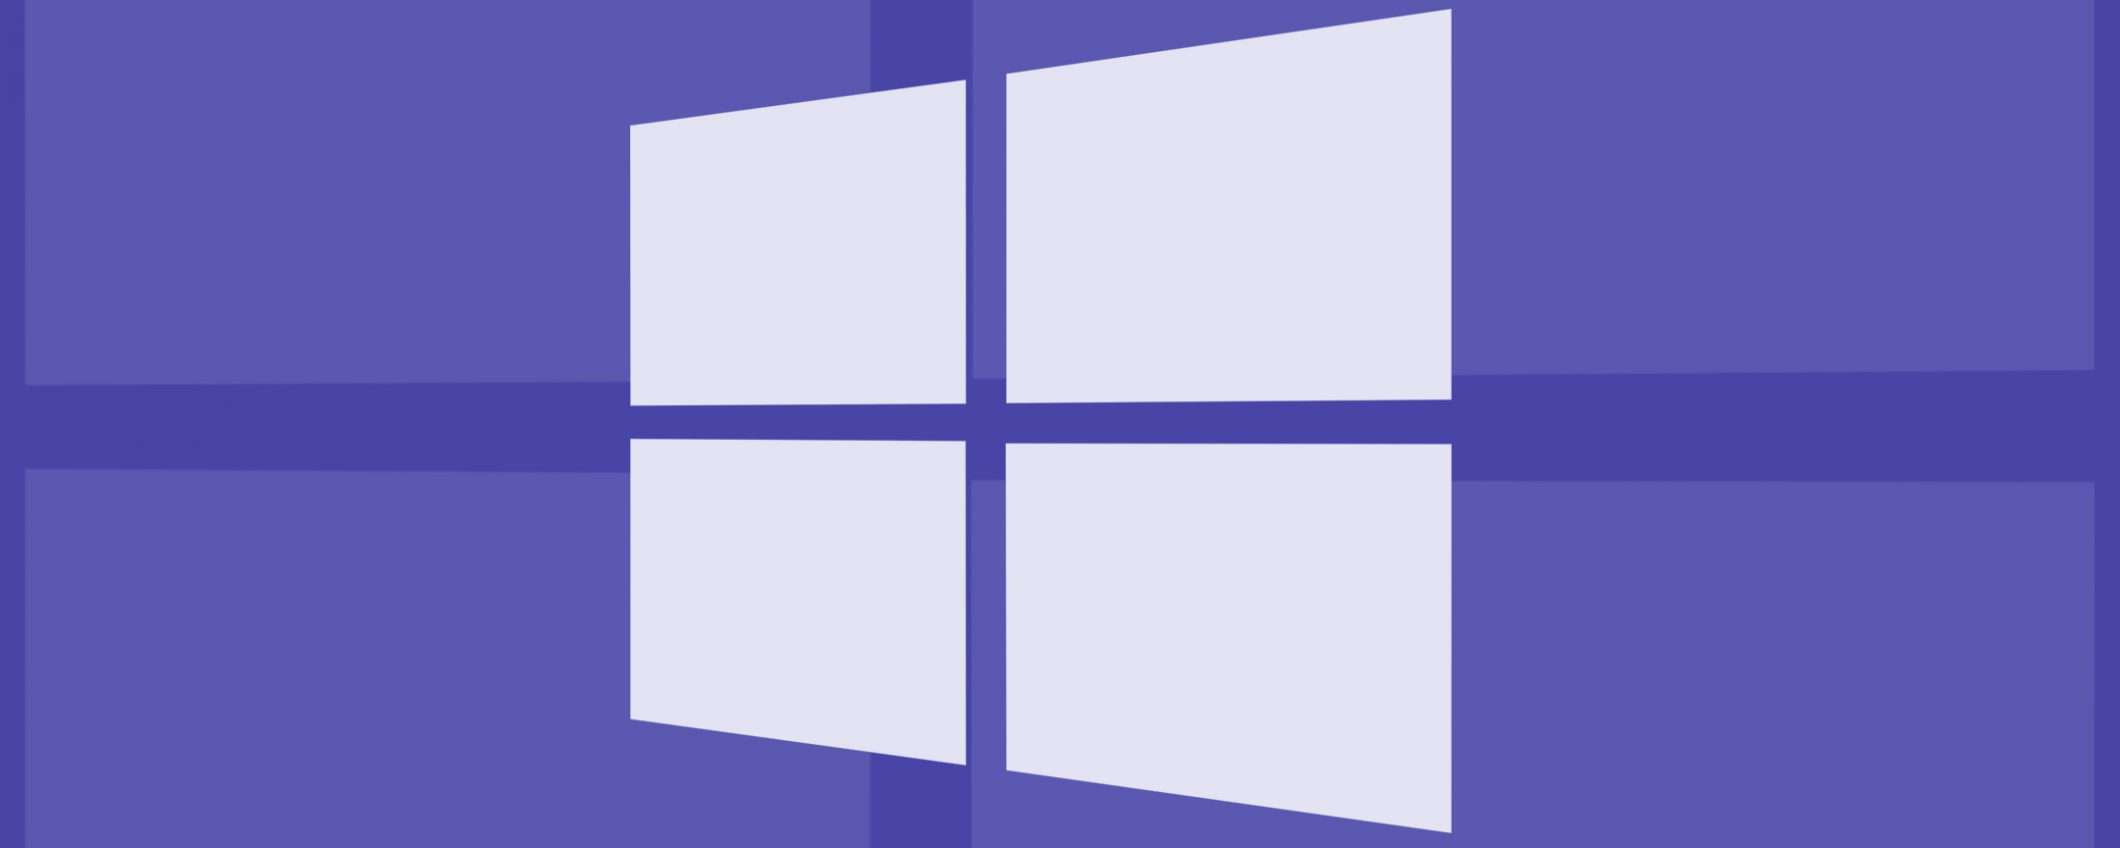 Windows 10, configurazione rapida dal cloud